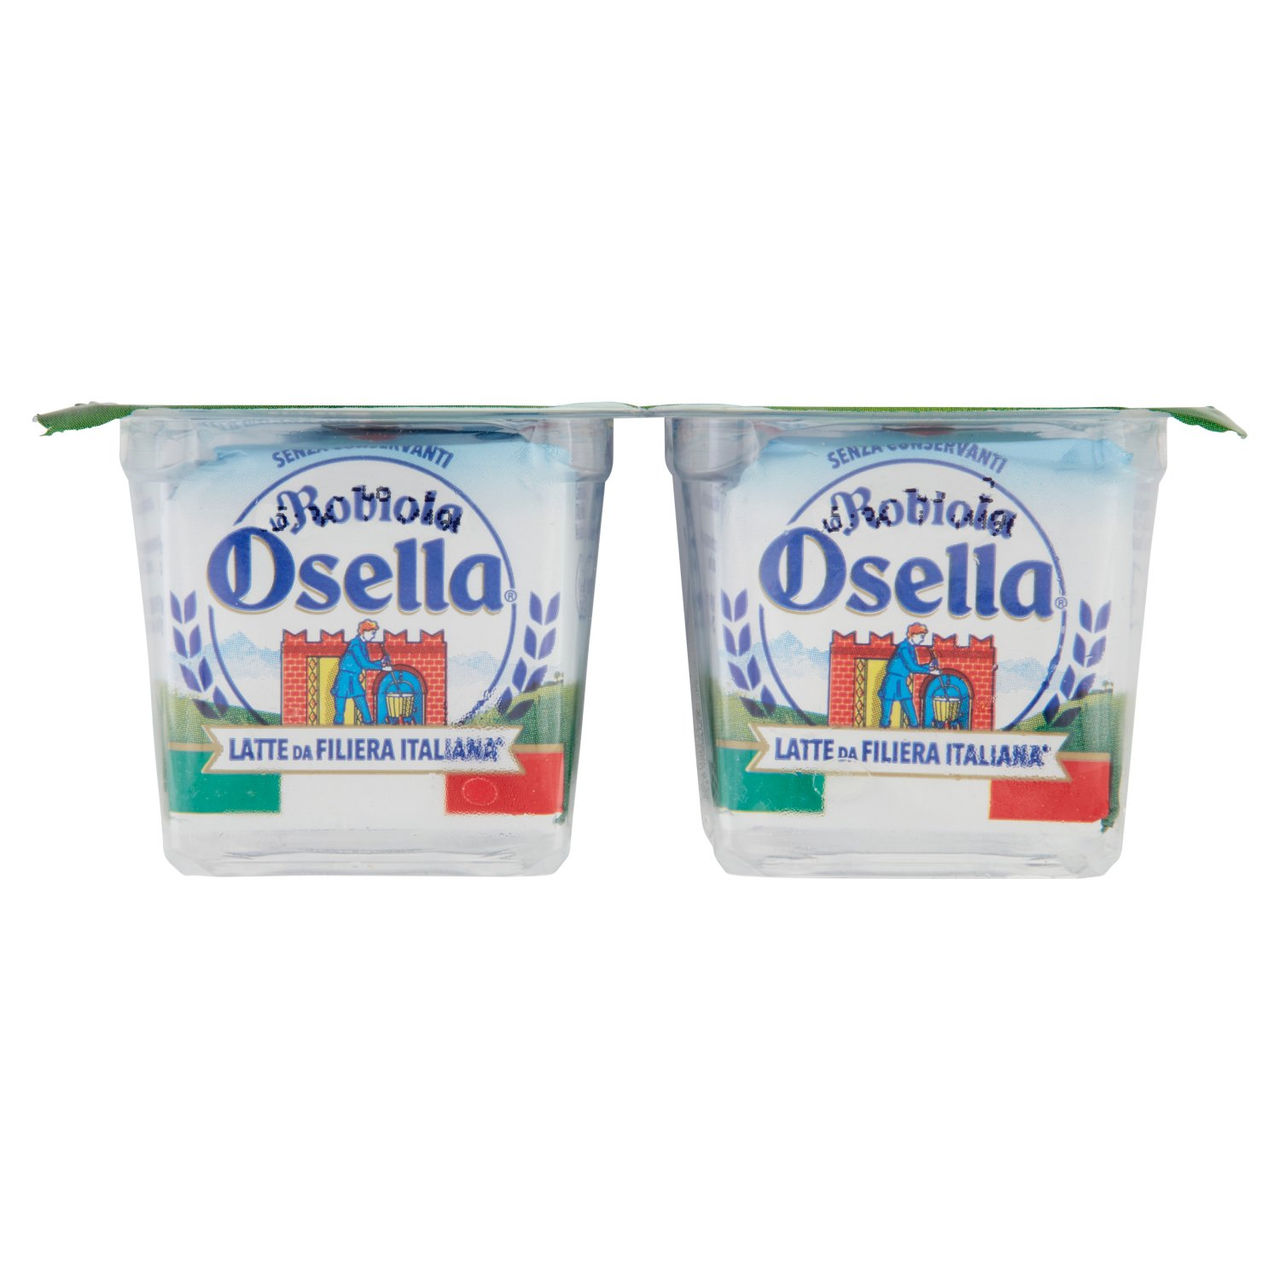 La Robiola Osella in vendita online